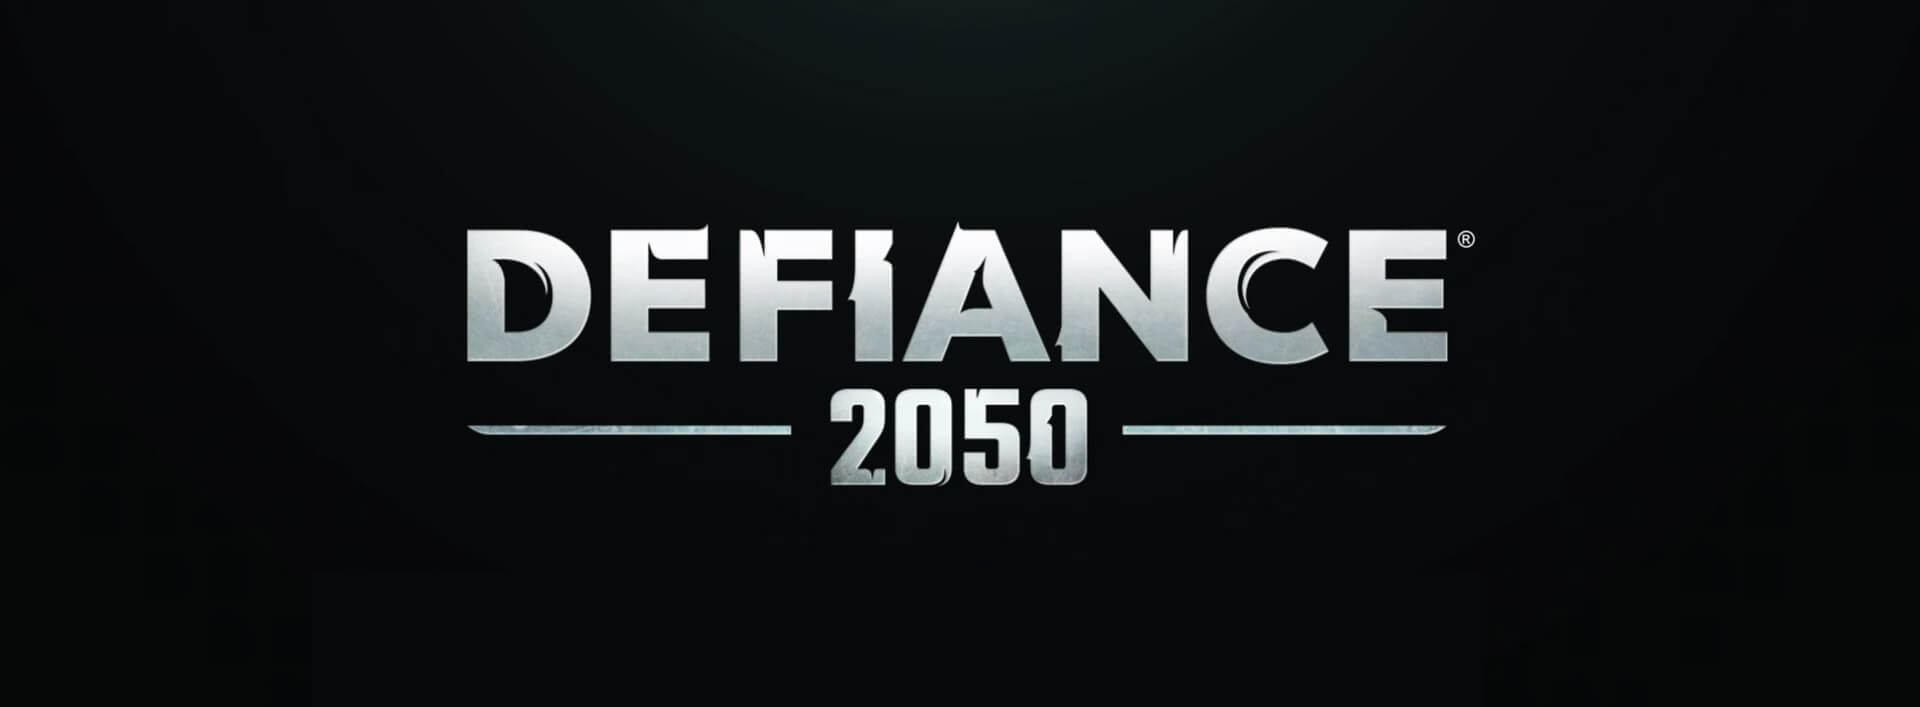 Defiance-2050 - Banner